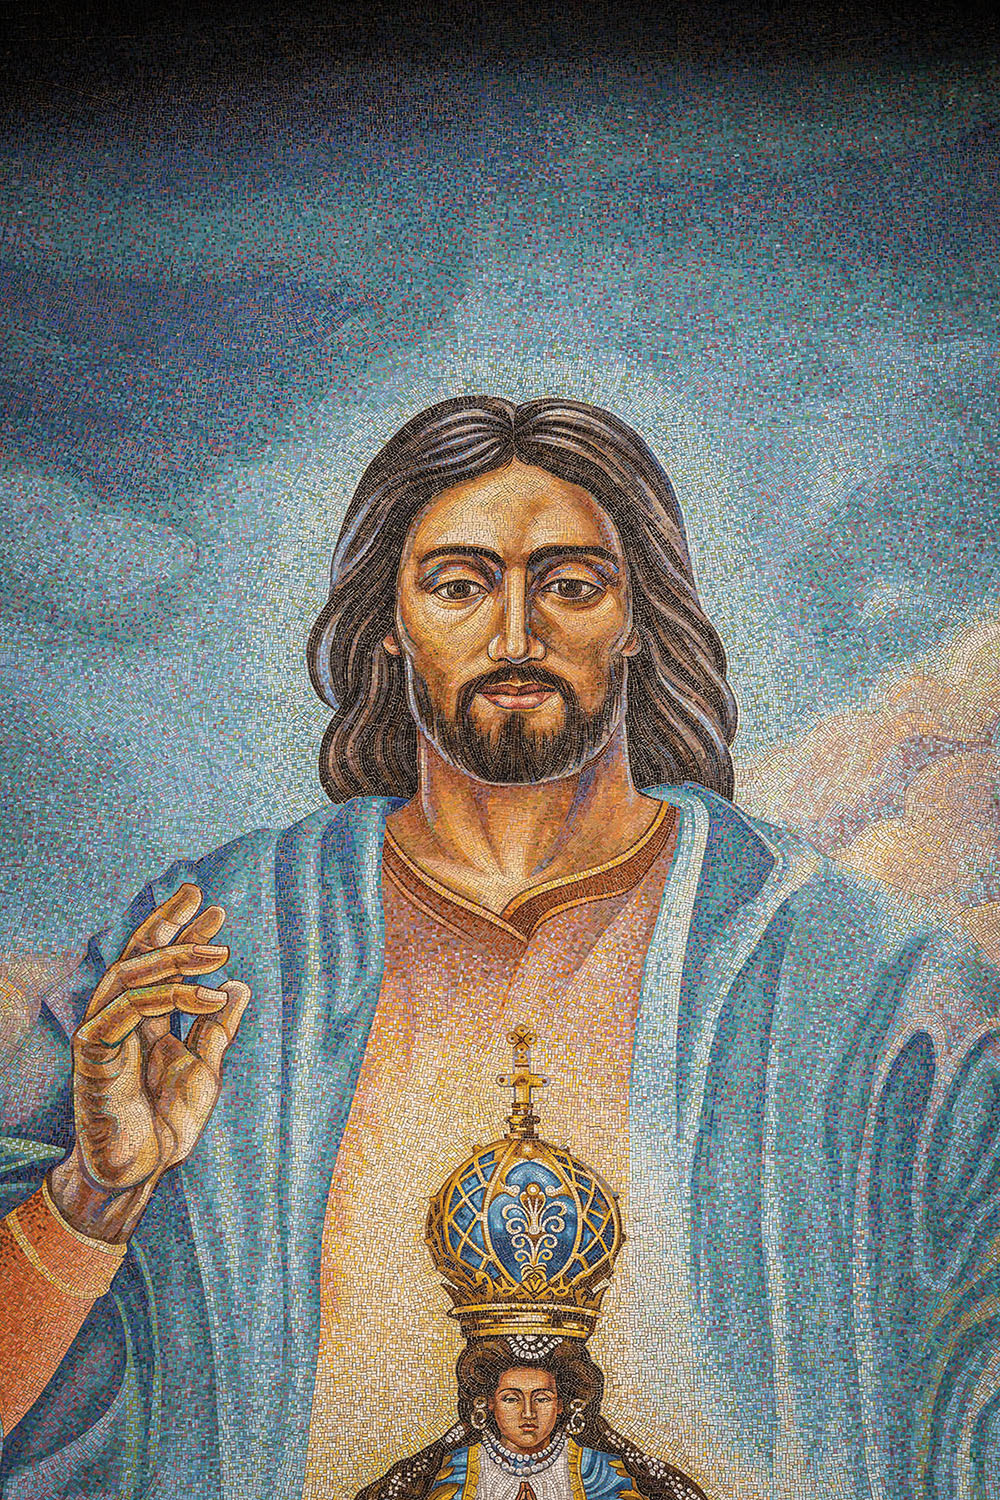 A tiled portrait of Jesus Christ wearing blue robes